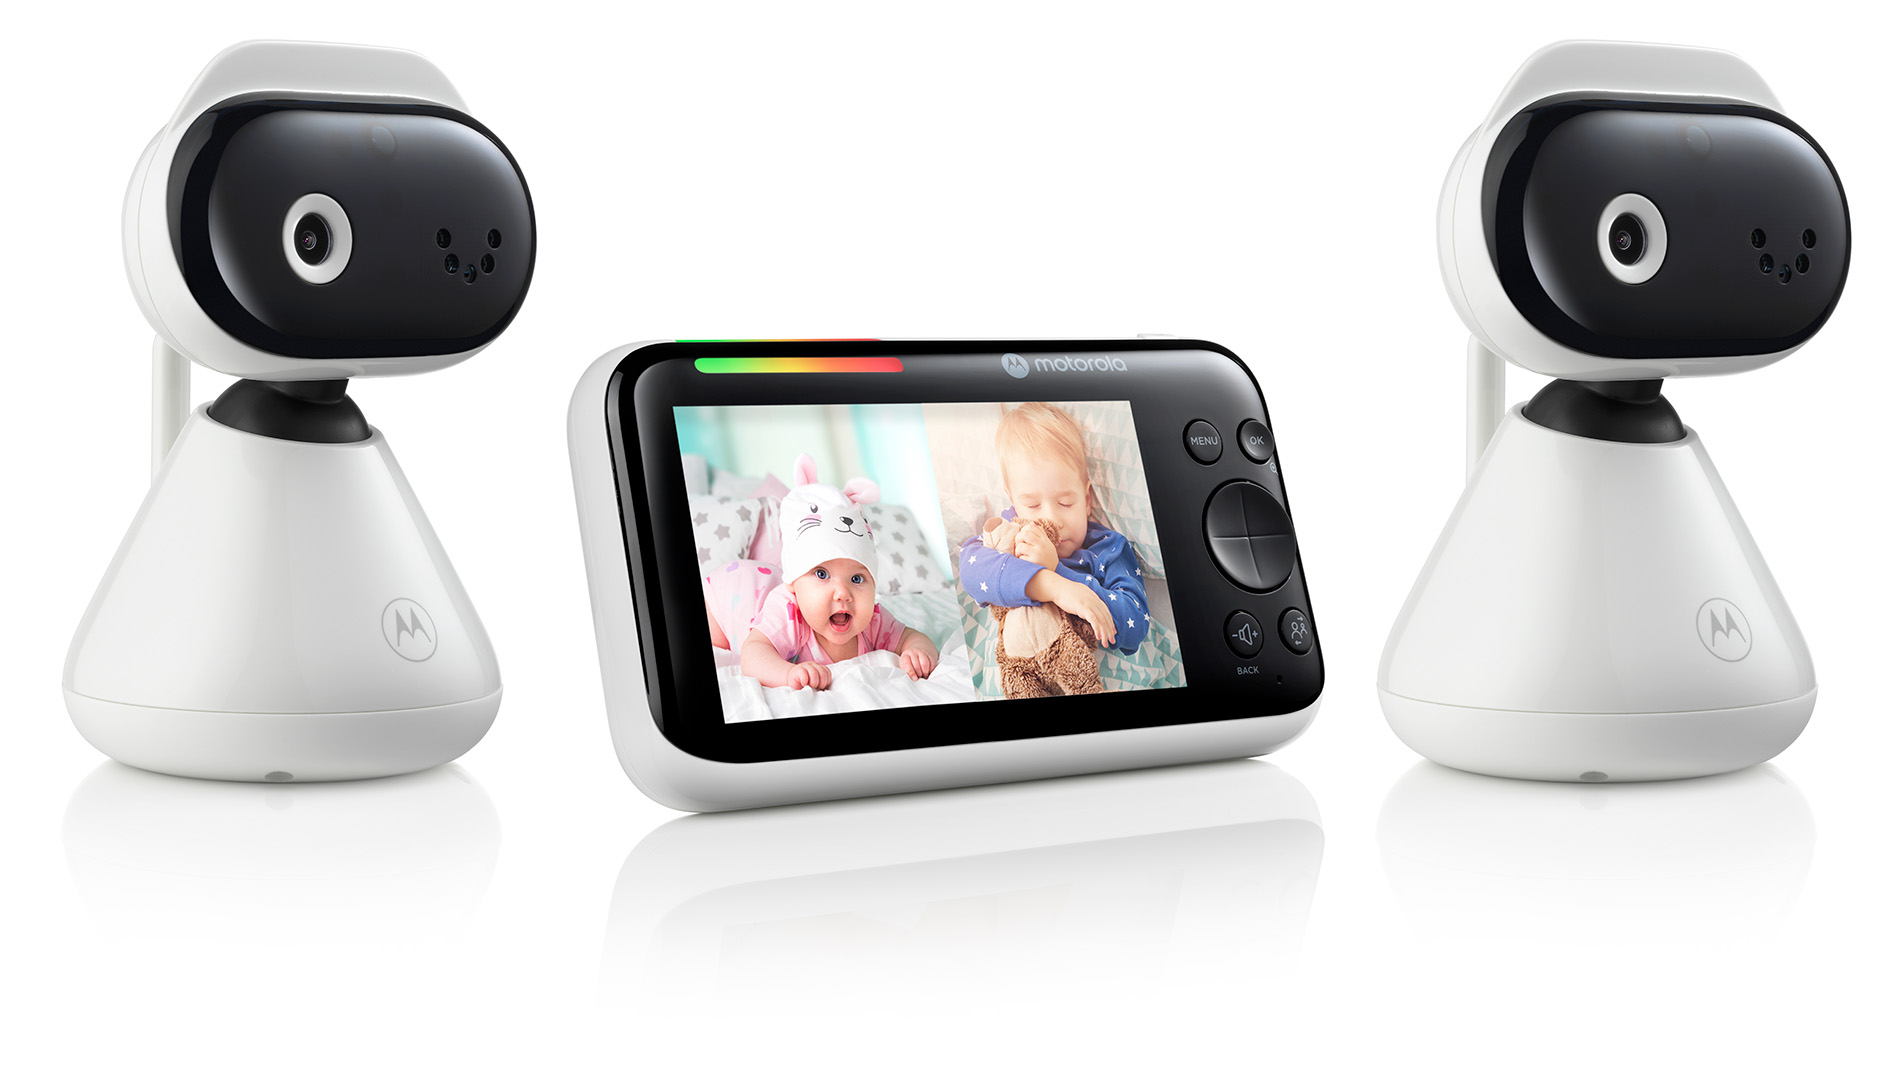 Motorola Nursery  PIP1500 CONNECT 5.0” Wi-Fi® Video Baby Monitor